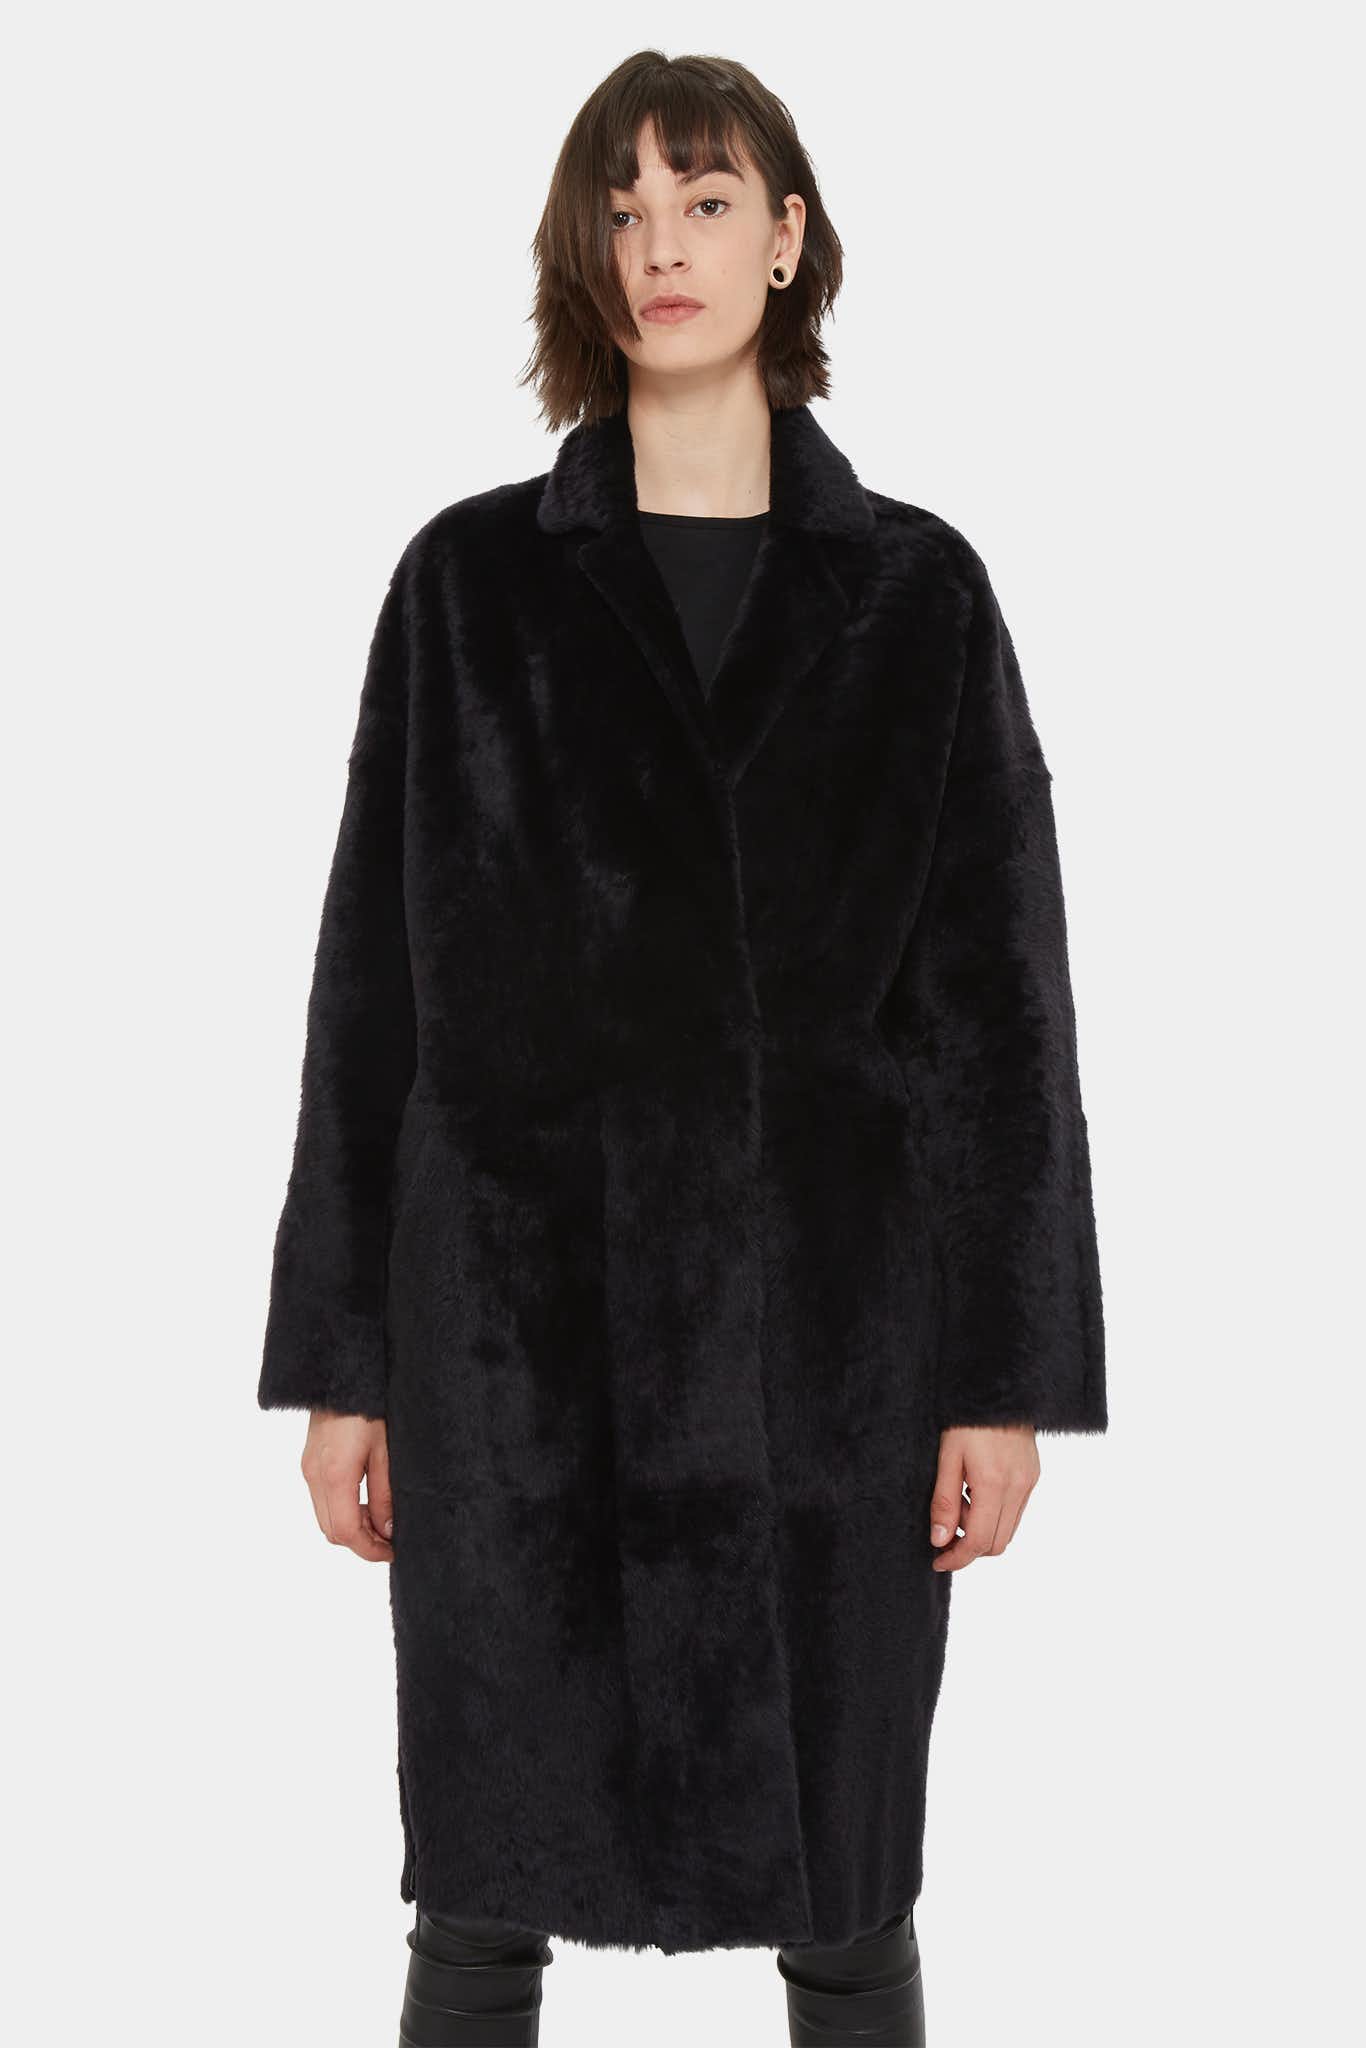 32 Paradis Sprung Frères Reversible black lambskin coat – LECLAIREUR